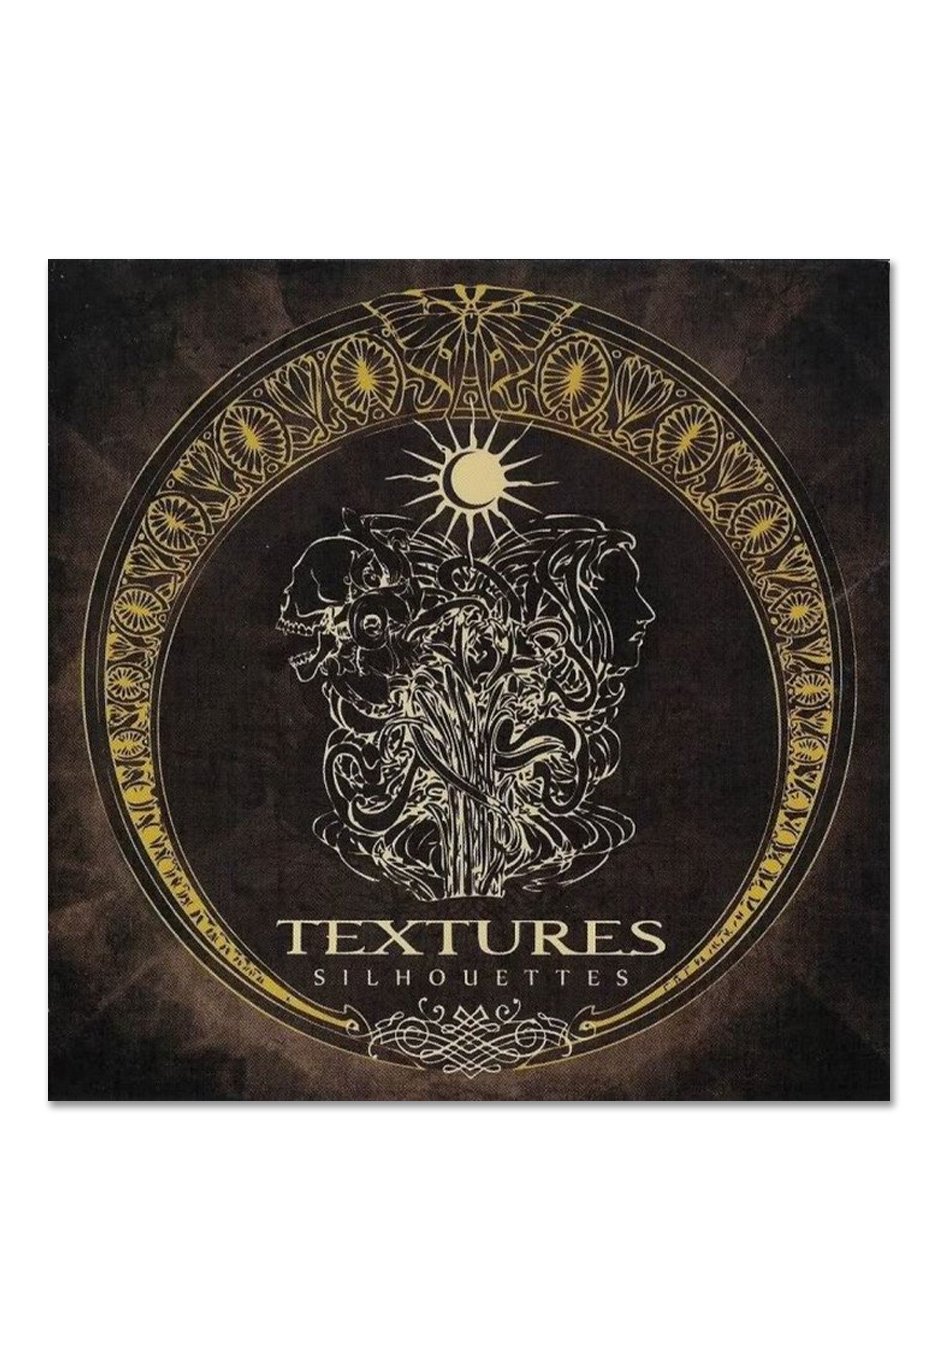 Textures - Silhouettes Ltd. - Digipak CD